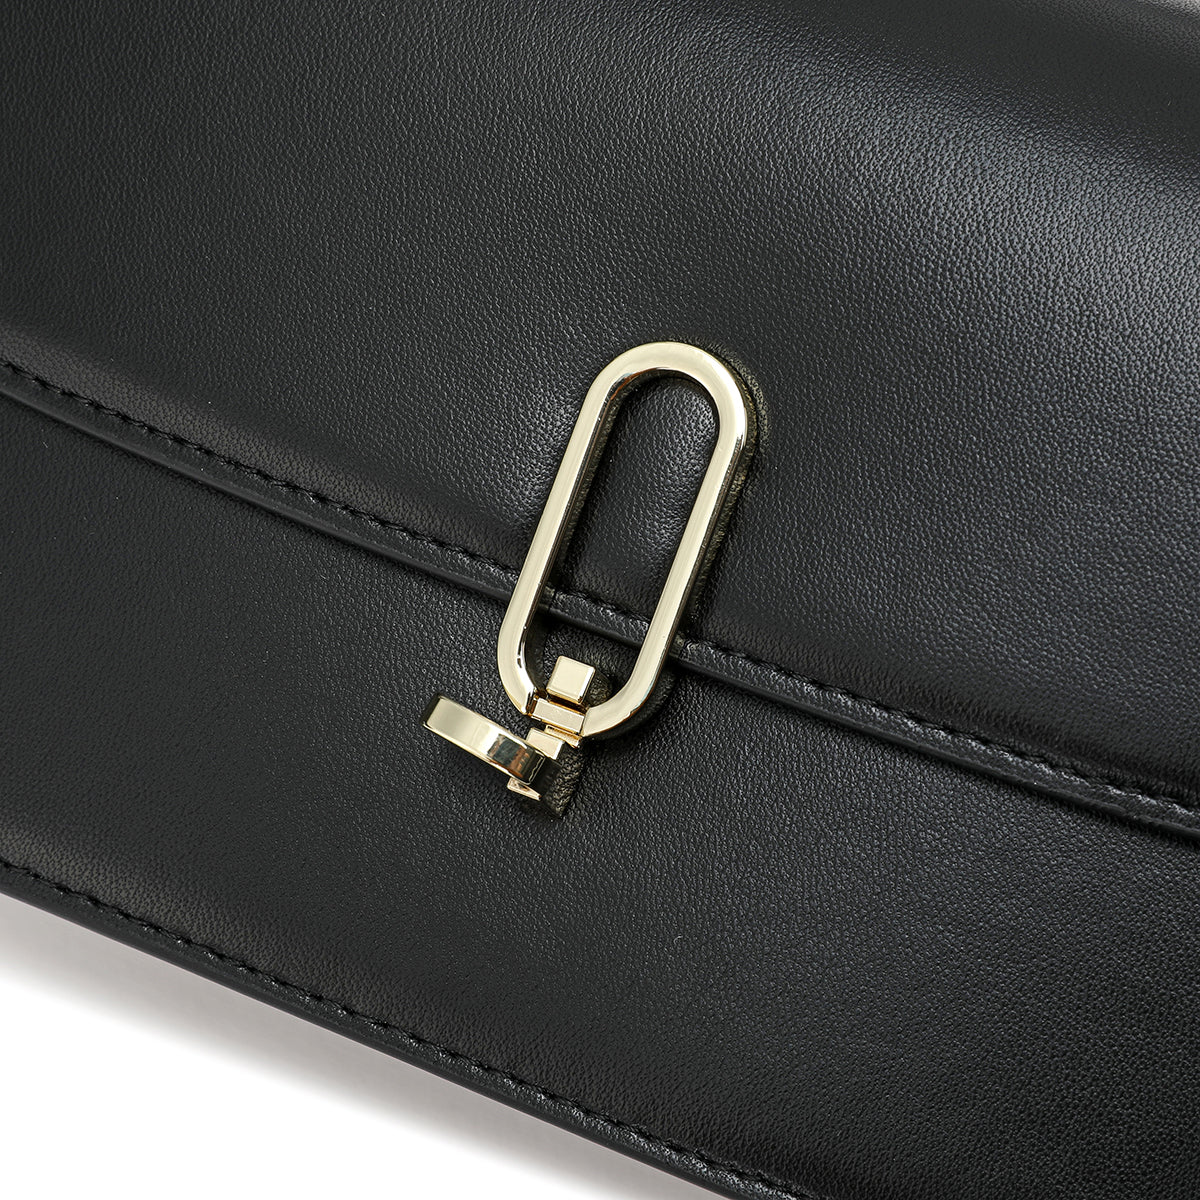 Classic bag made of luxurious microfiber - black, width 24 cm